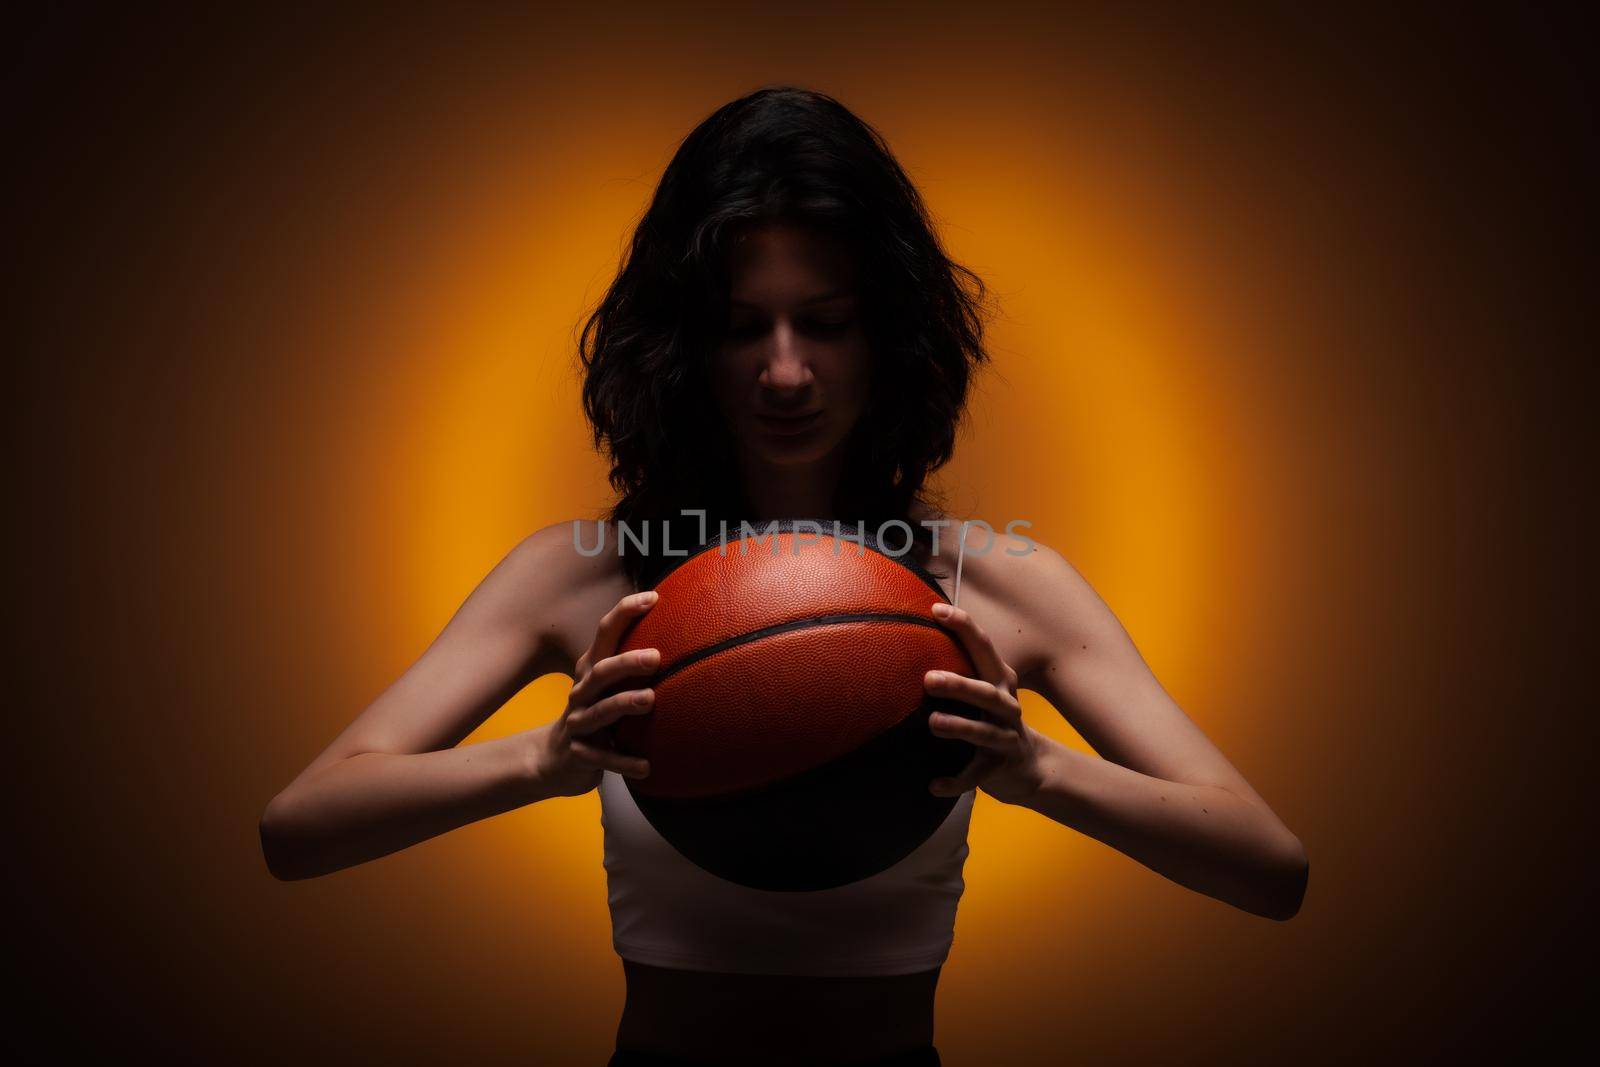 Teenage girl with basketball. Studio portrait on orange colored background.. by kokimk